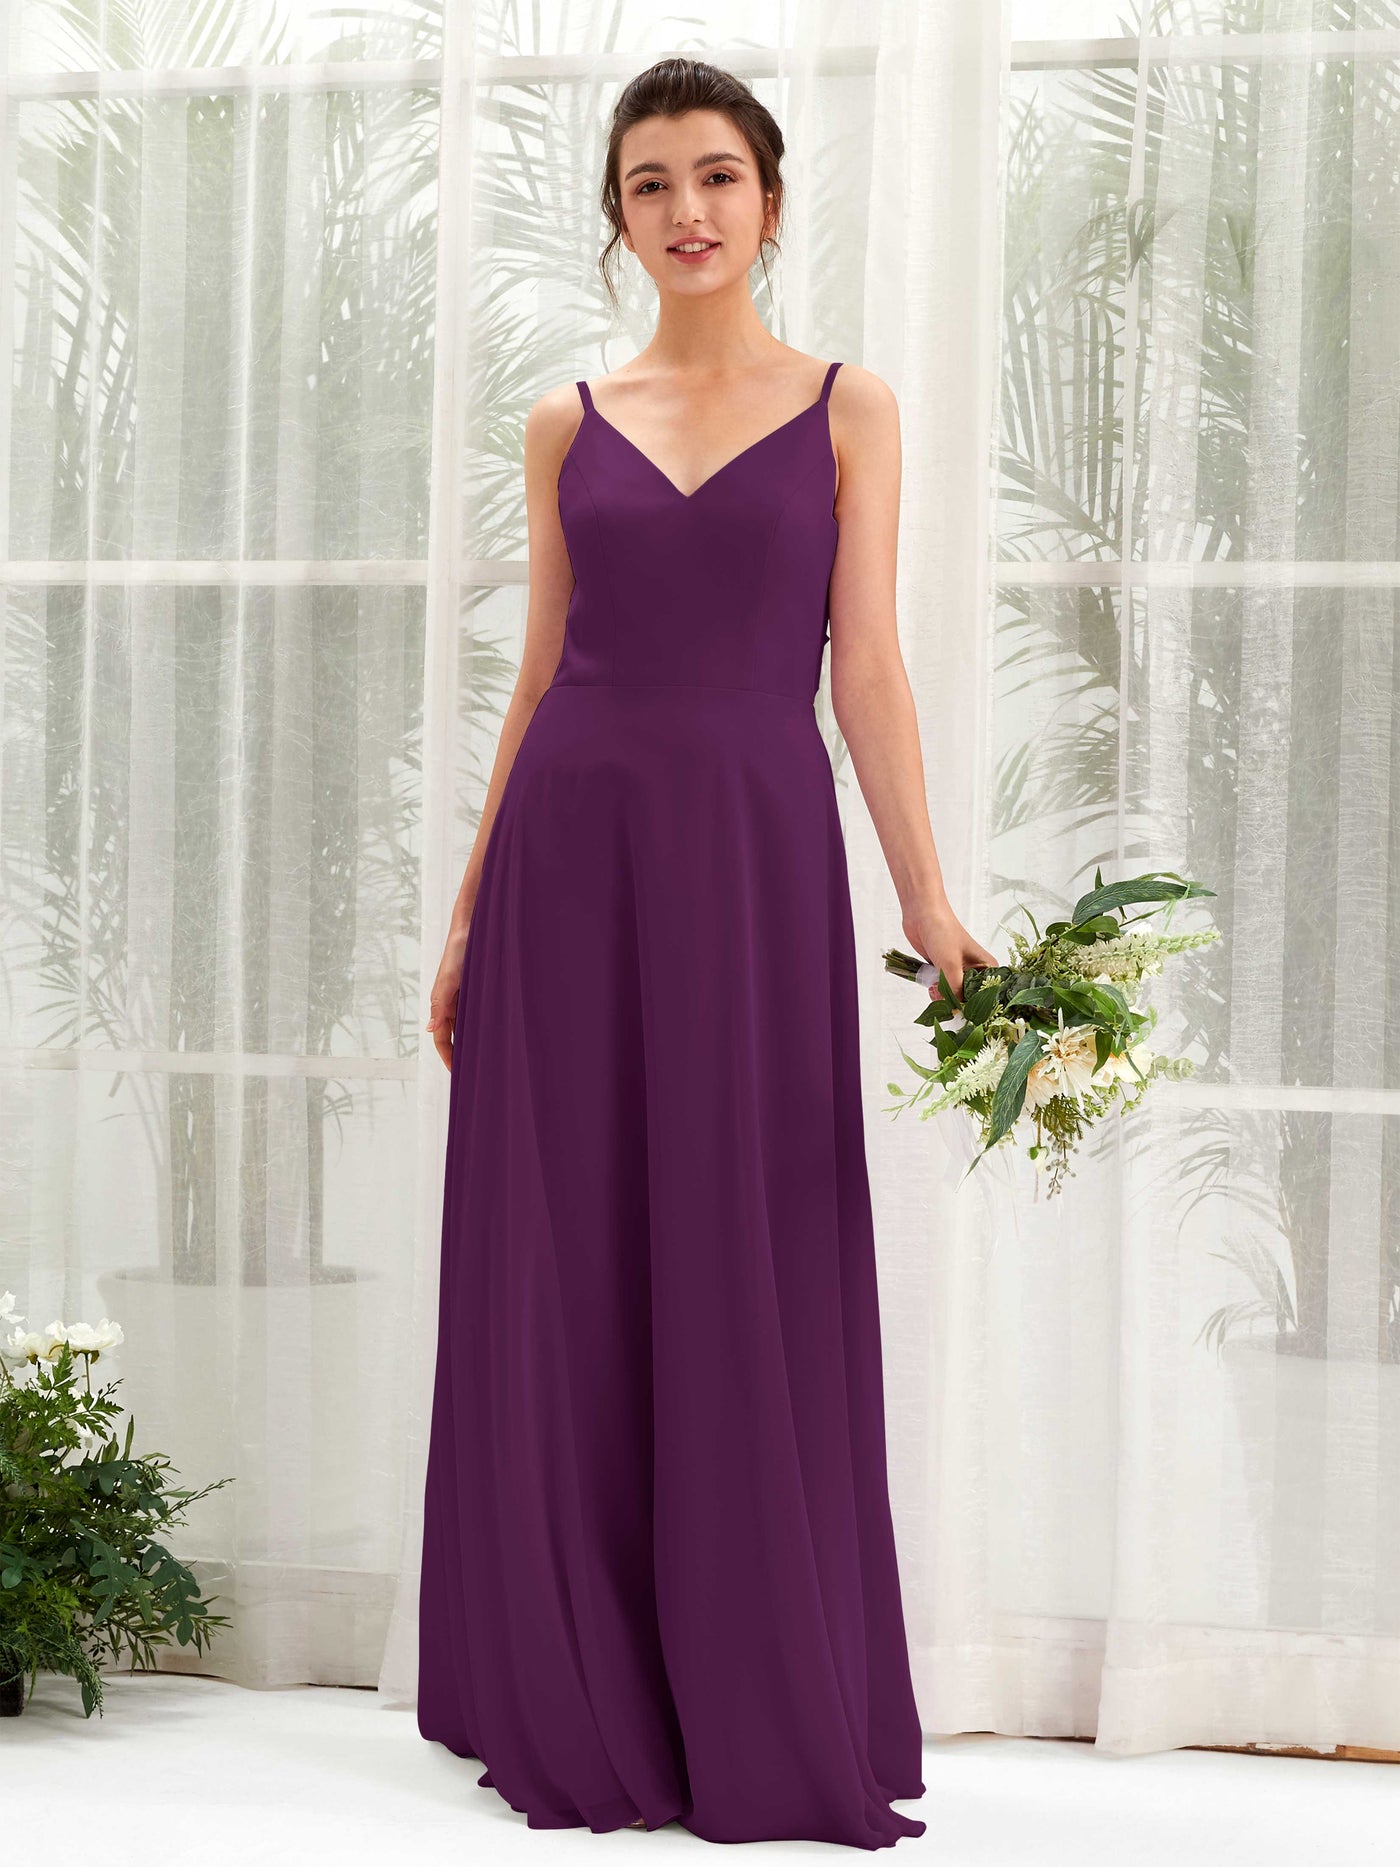 Grape Bridesmaid Dresses Bridesmaid Dress A-line Chiffon Spaghetti-straps Full Length Sleeveless Wedding Party Dress (81220631)#color_grape